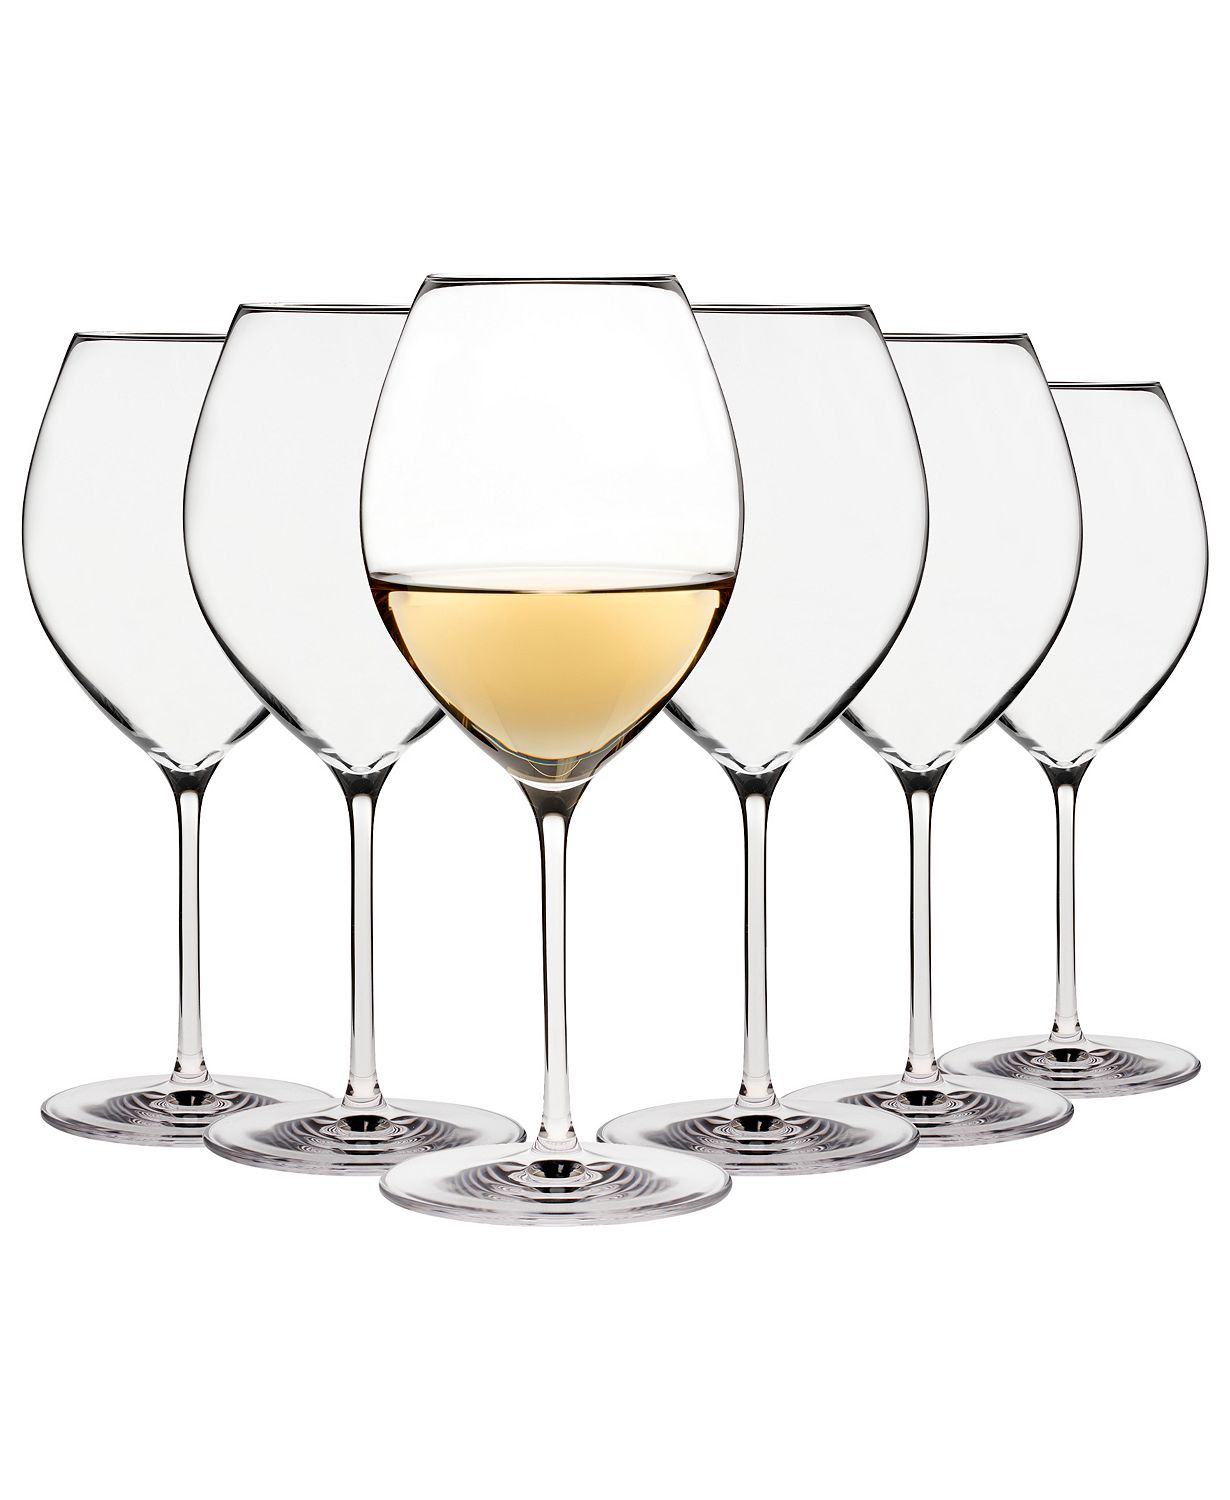 Karen MacNeil's Flavor First™ Wine Glasses – Variety Set of 6